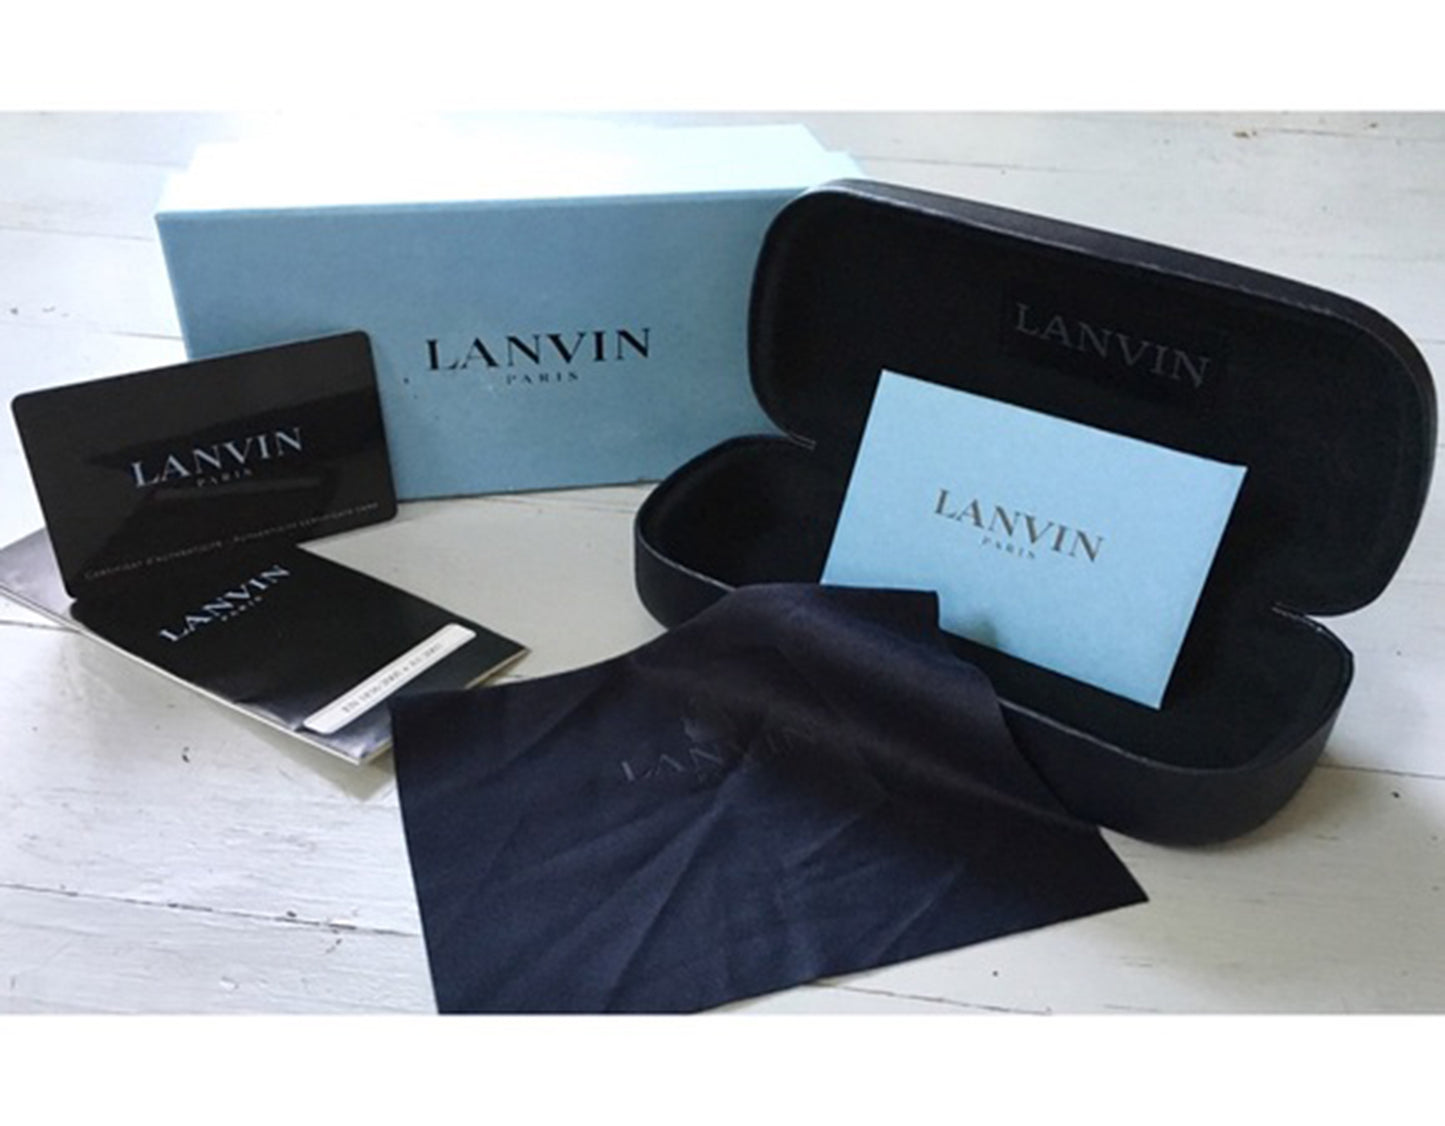 Lanvin VLN744S-06ZG-53 53mm New Eyeglasses